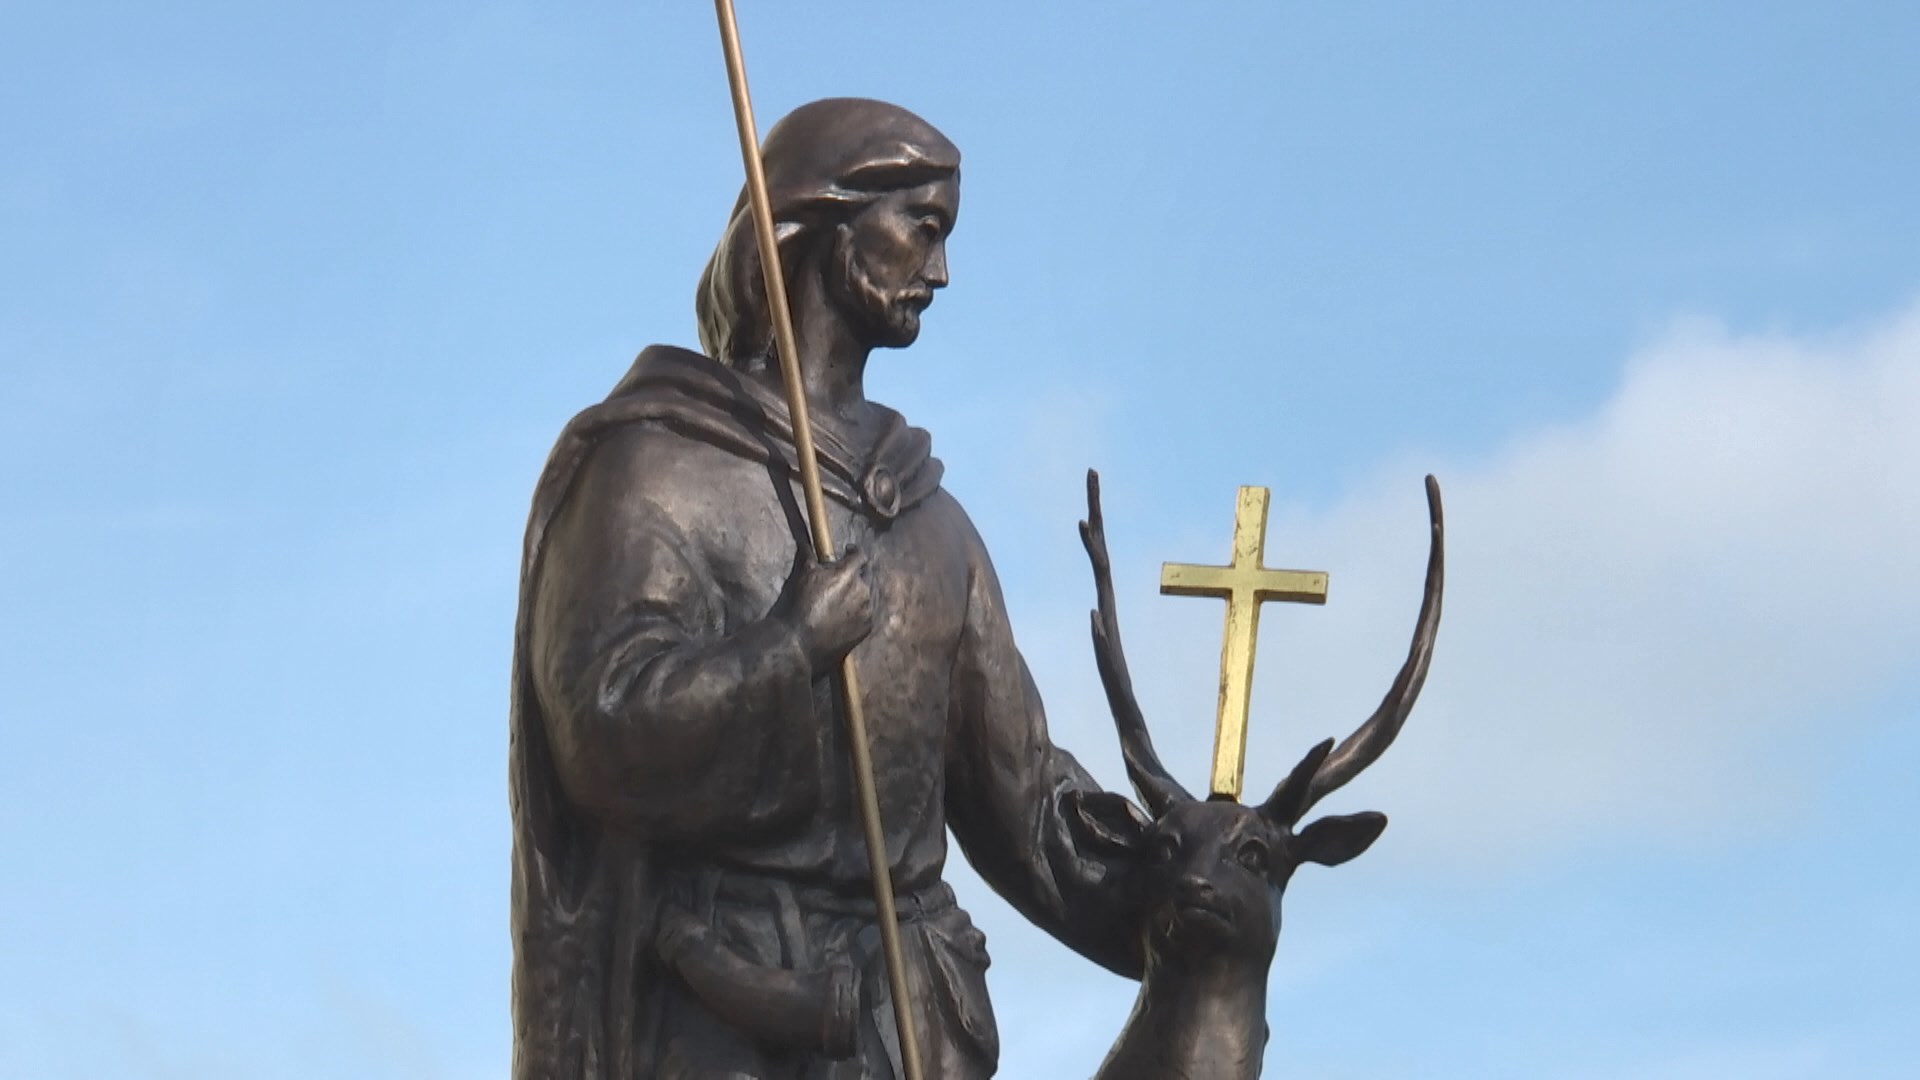 St. Hubert’s statue installed in Grodno